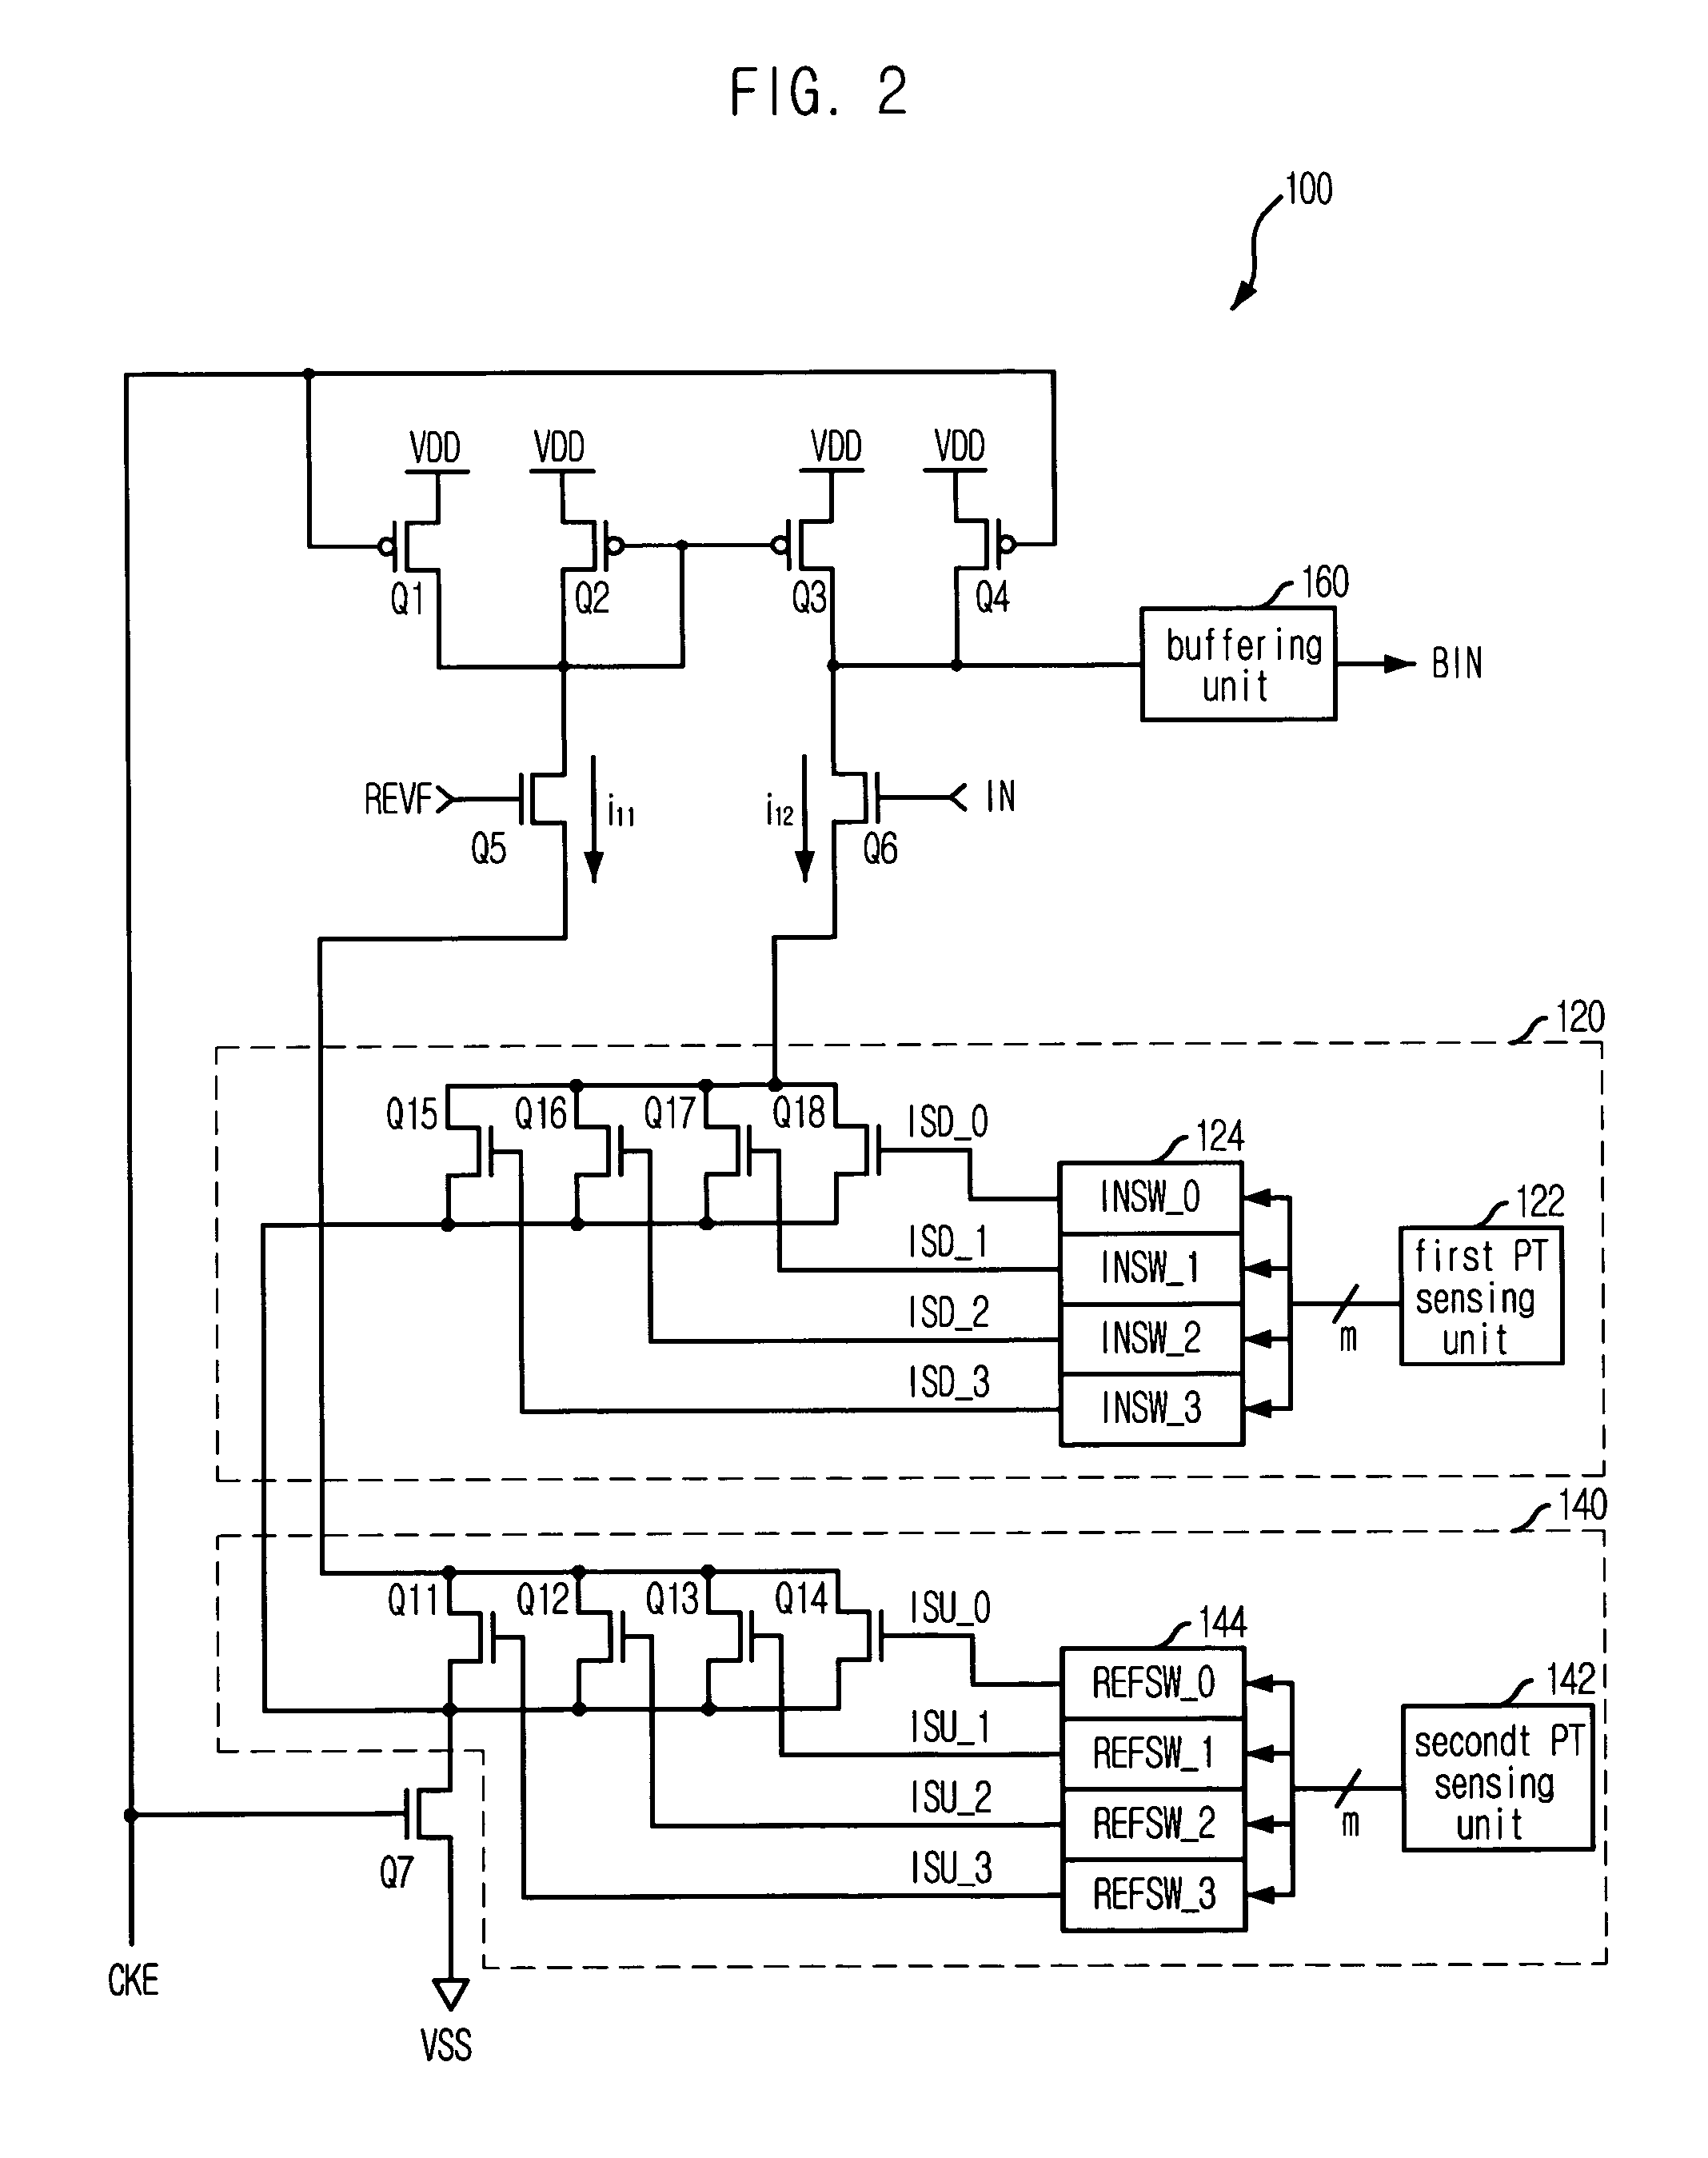 Data input buffer in semiconductor device